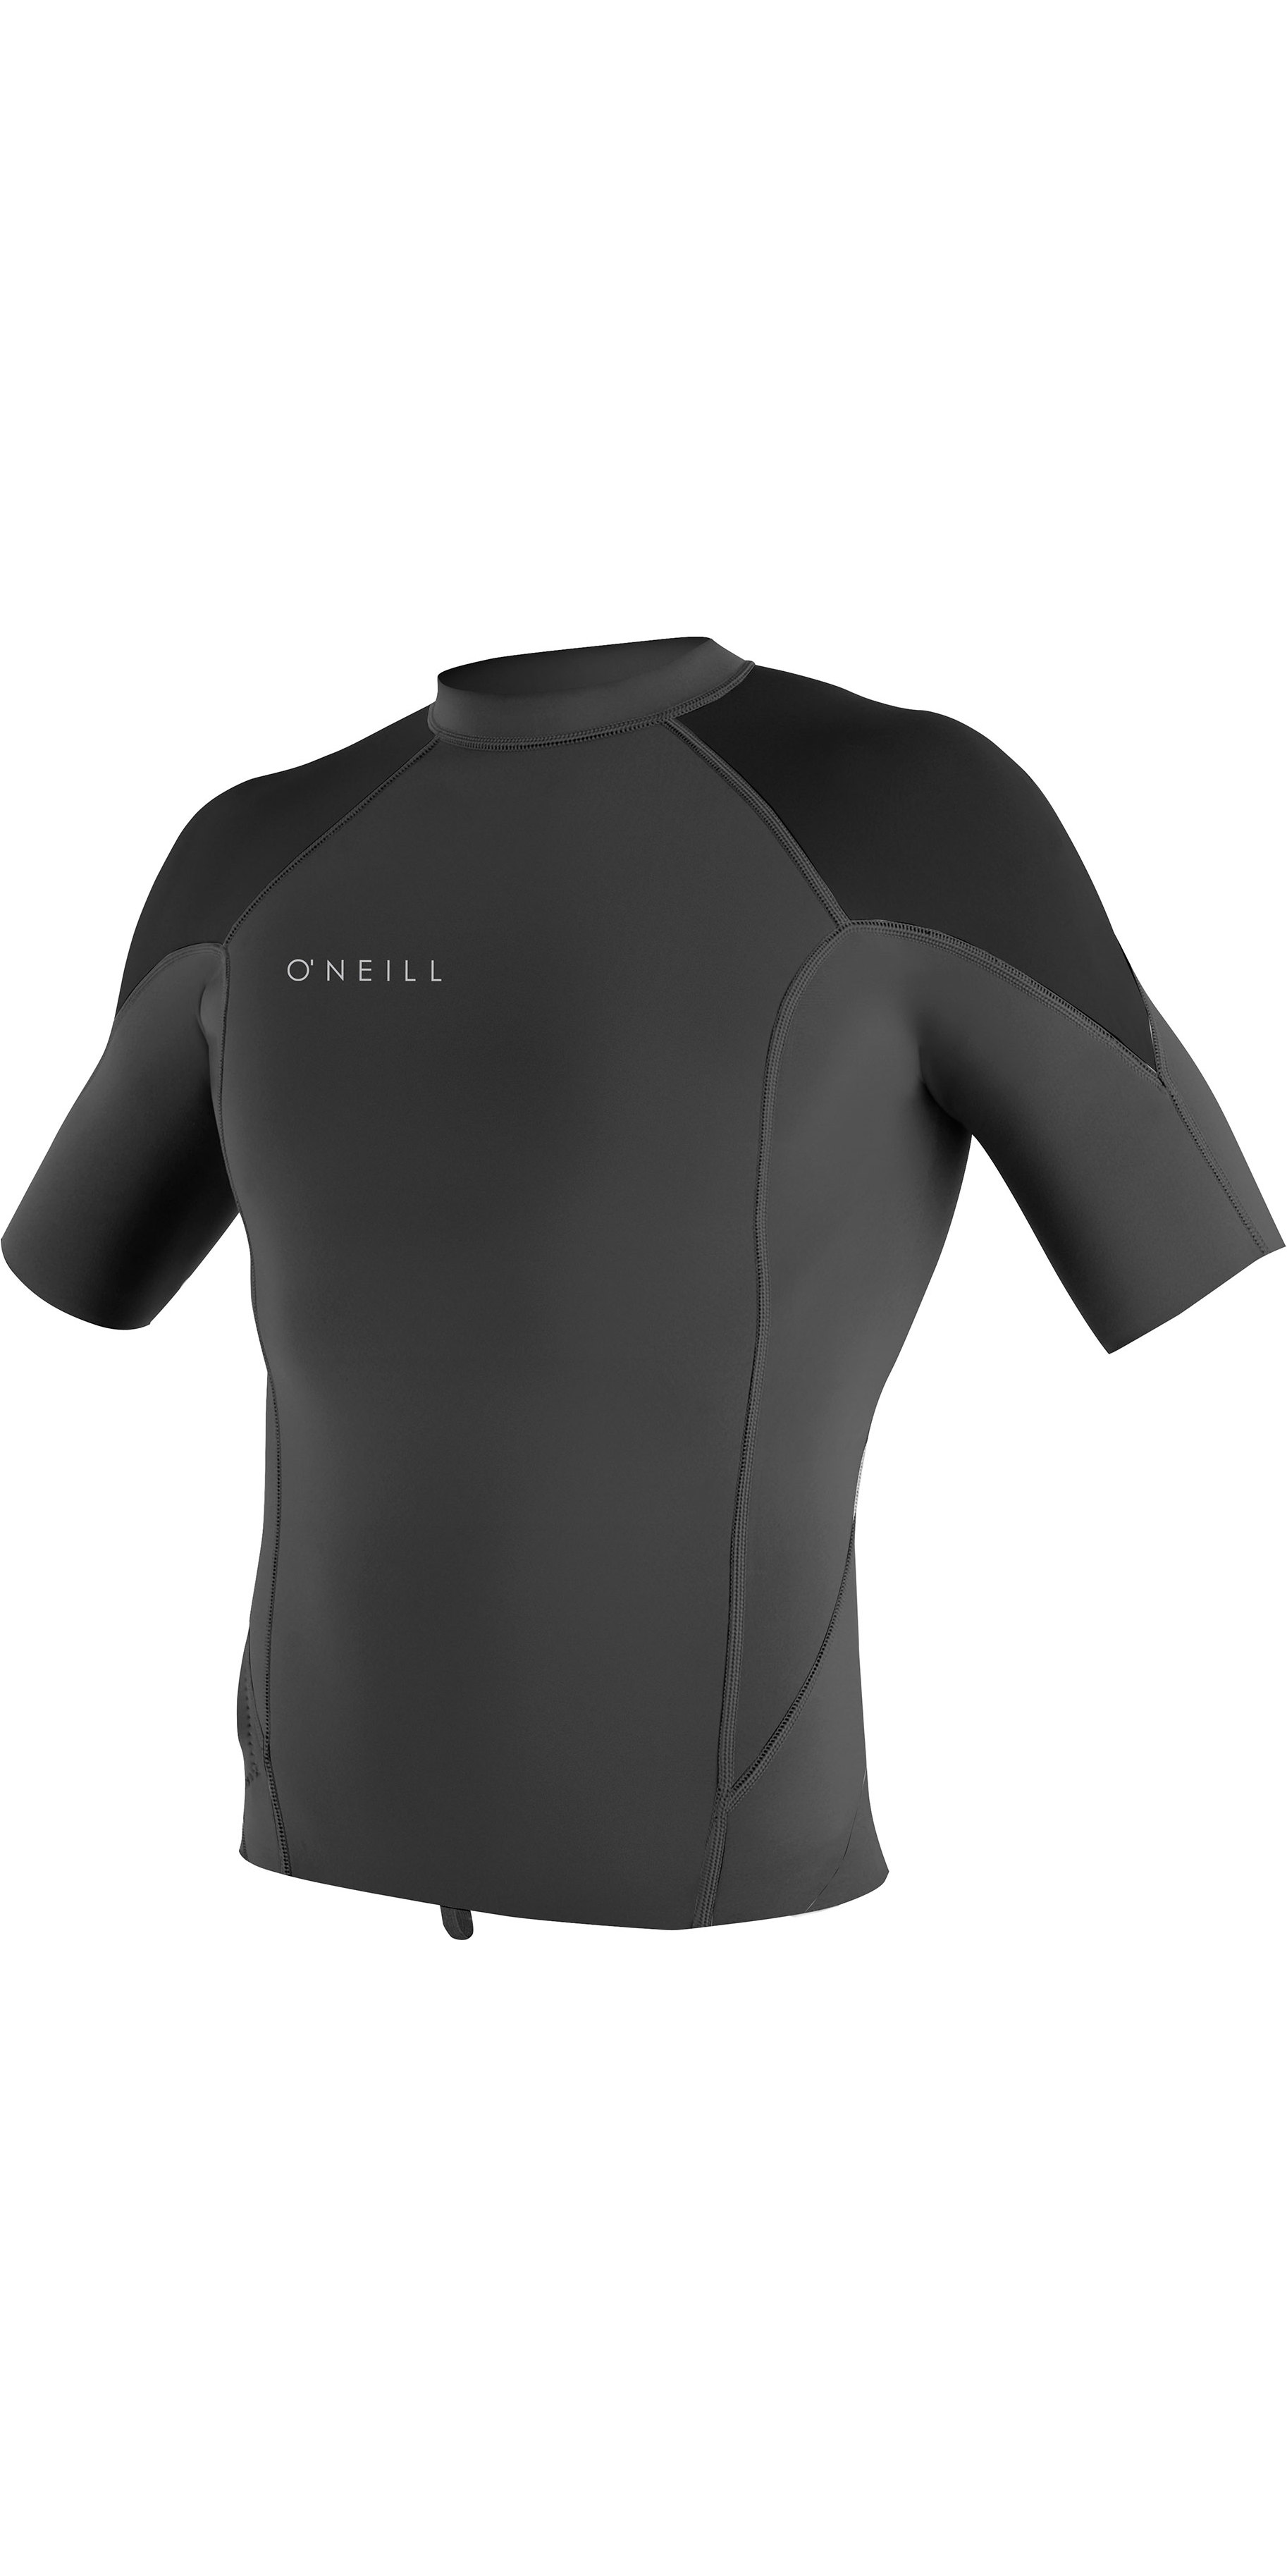 Nookie Ti Vest Short Sleeve-1mm Neo Top-Kayak/Surf/SUP/Wetsuit Jacket Blk/Gry 